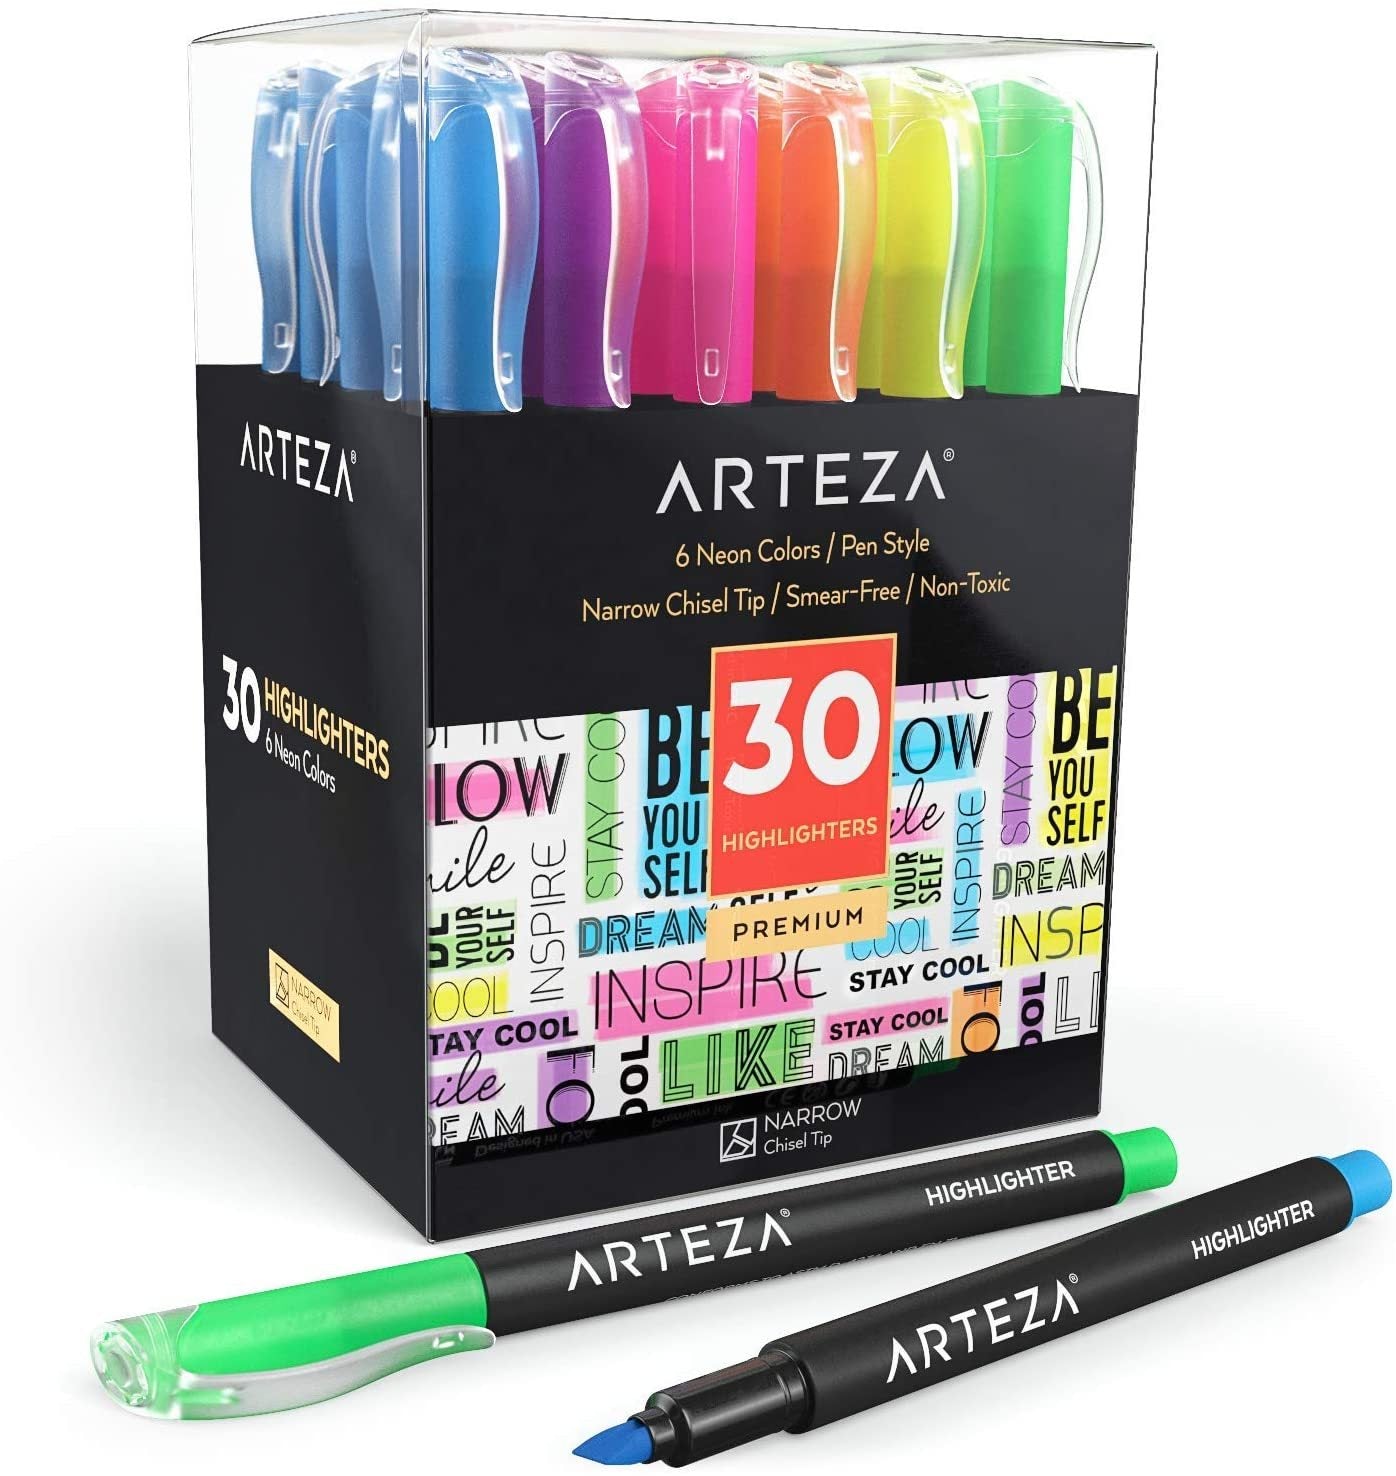 ARTEZA Highlighter Pens  Highlighter set, Highlighter pen